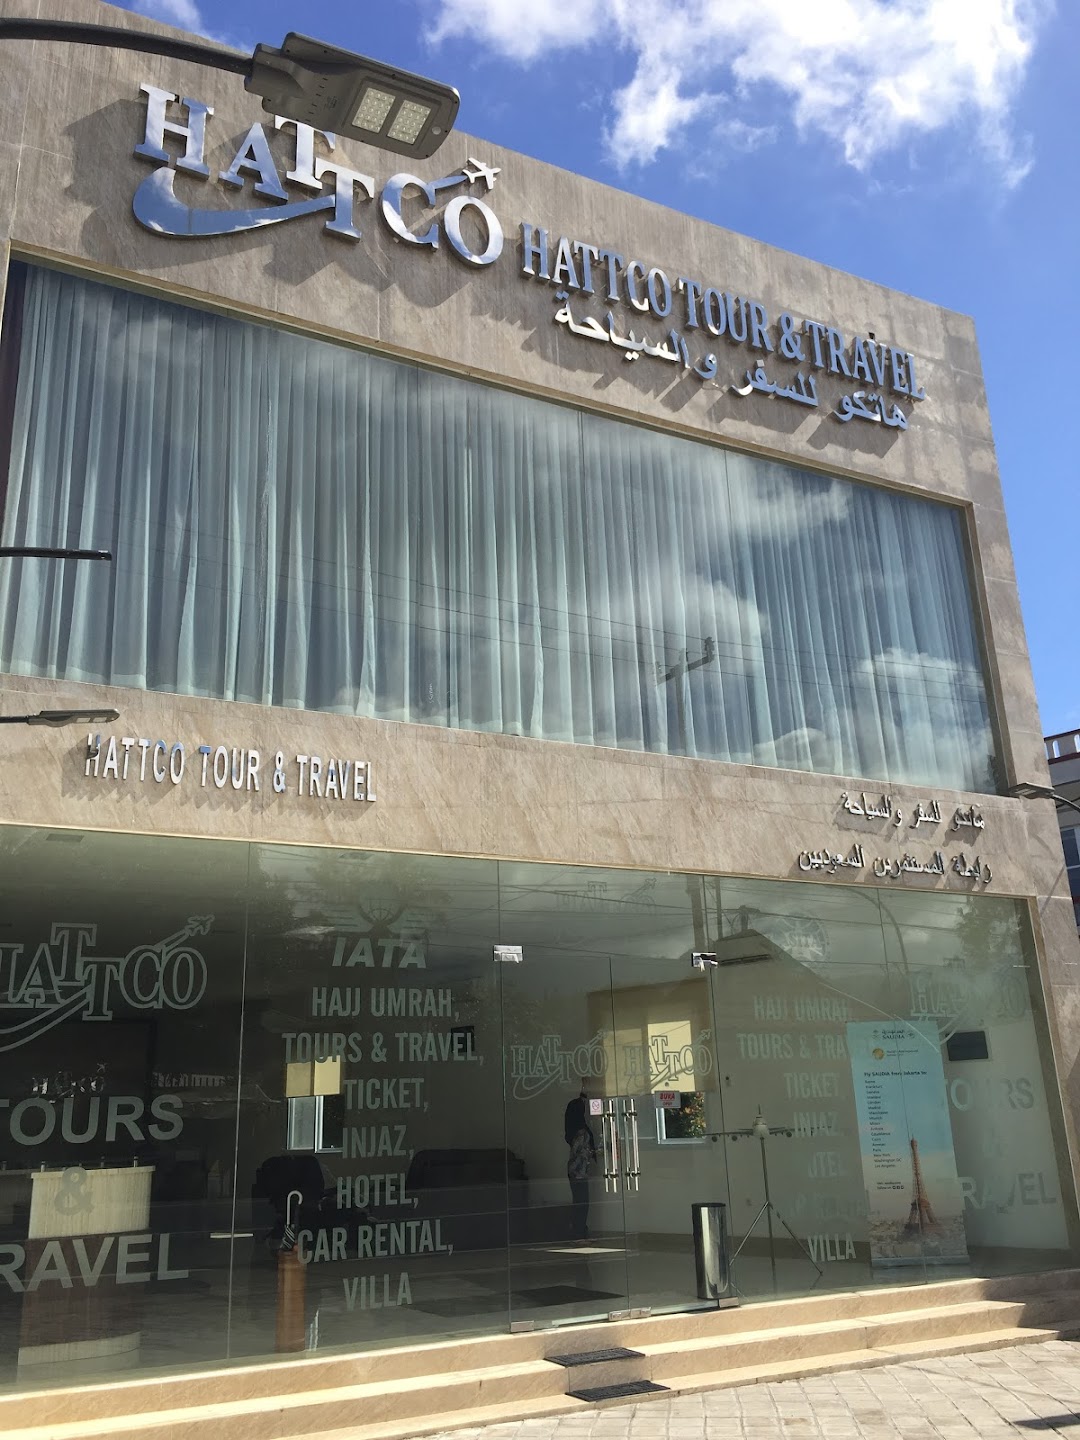 HATTCO tours&travel